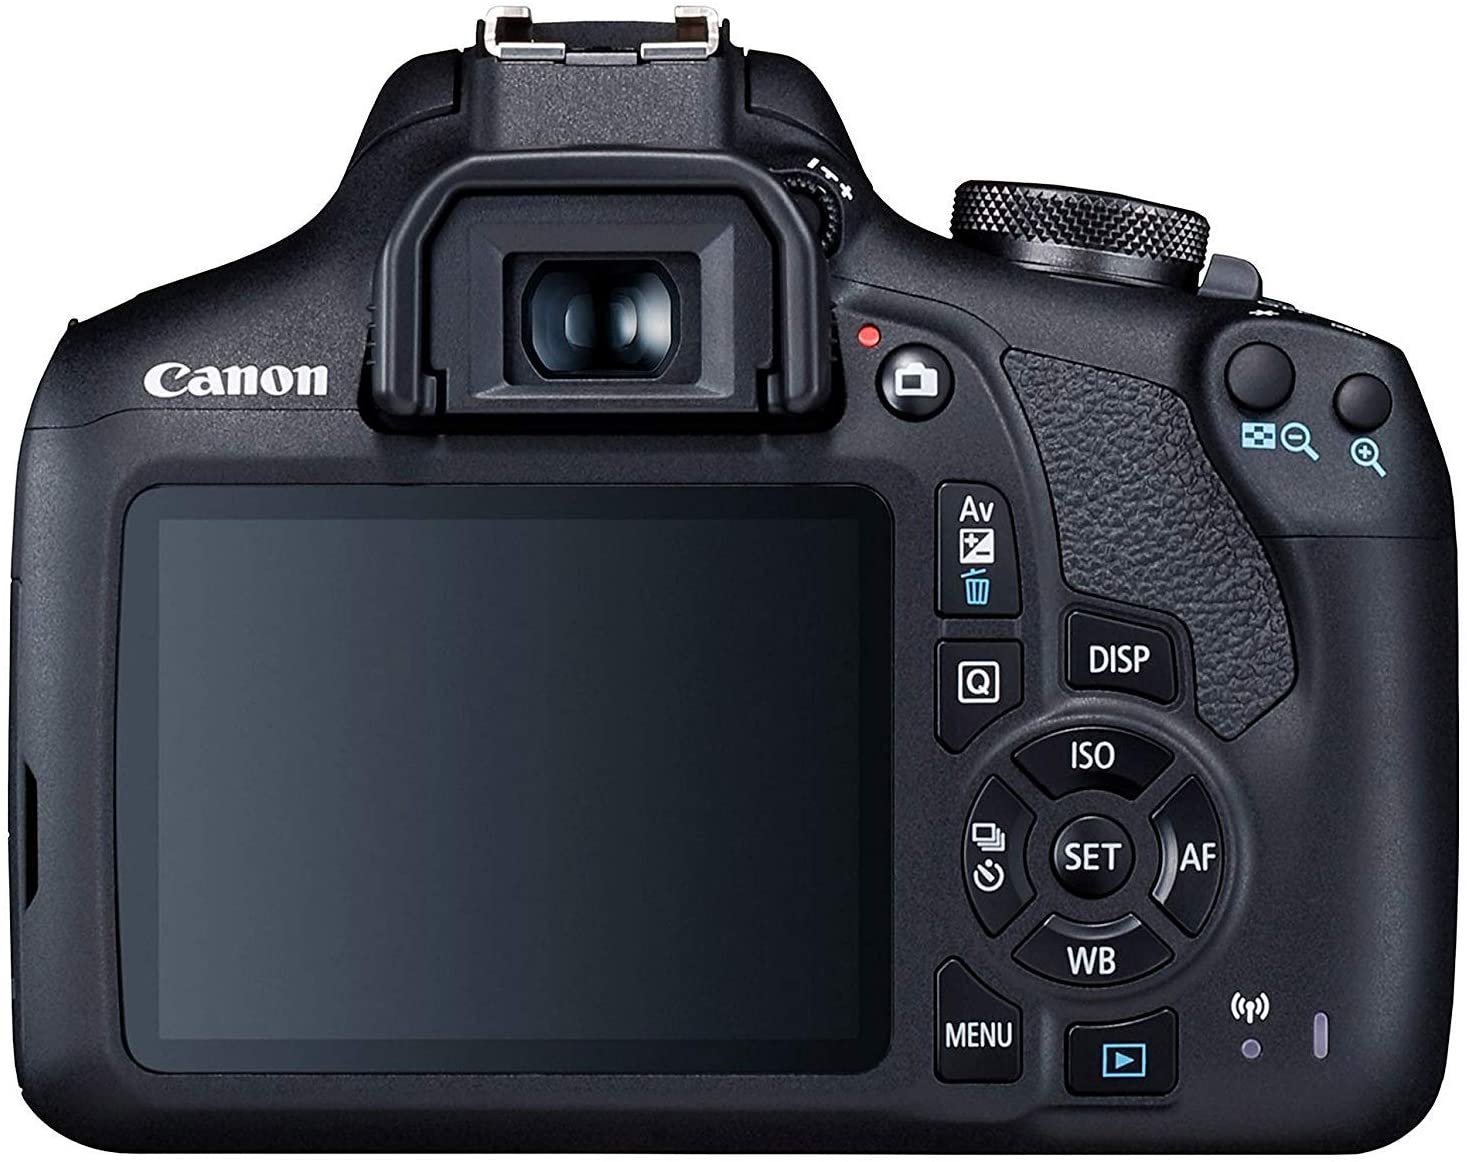 Canon EOS 2000D  Digital SLR Camera with 18-55mm Lens Kit (Black) - Basic Accessories Bundle - image 3 of 3